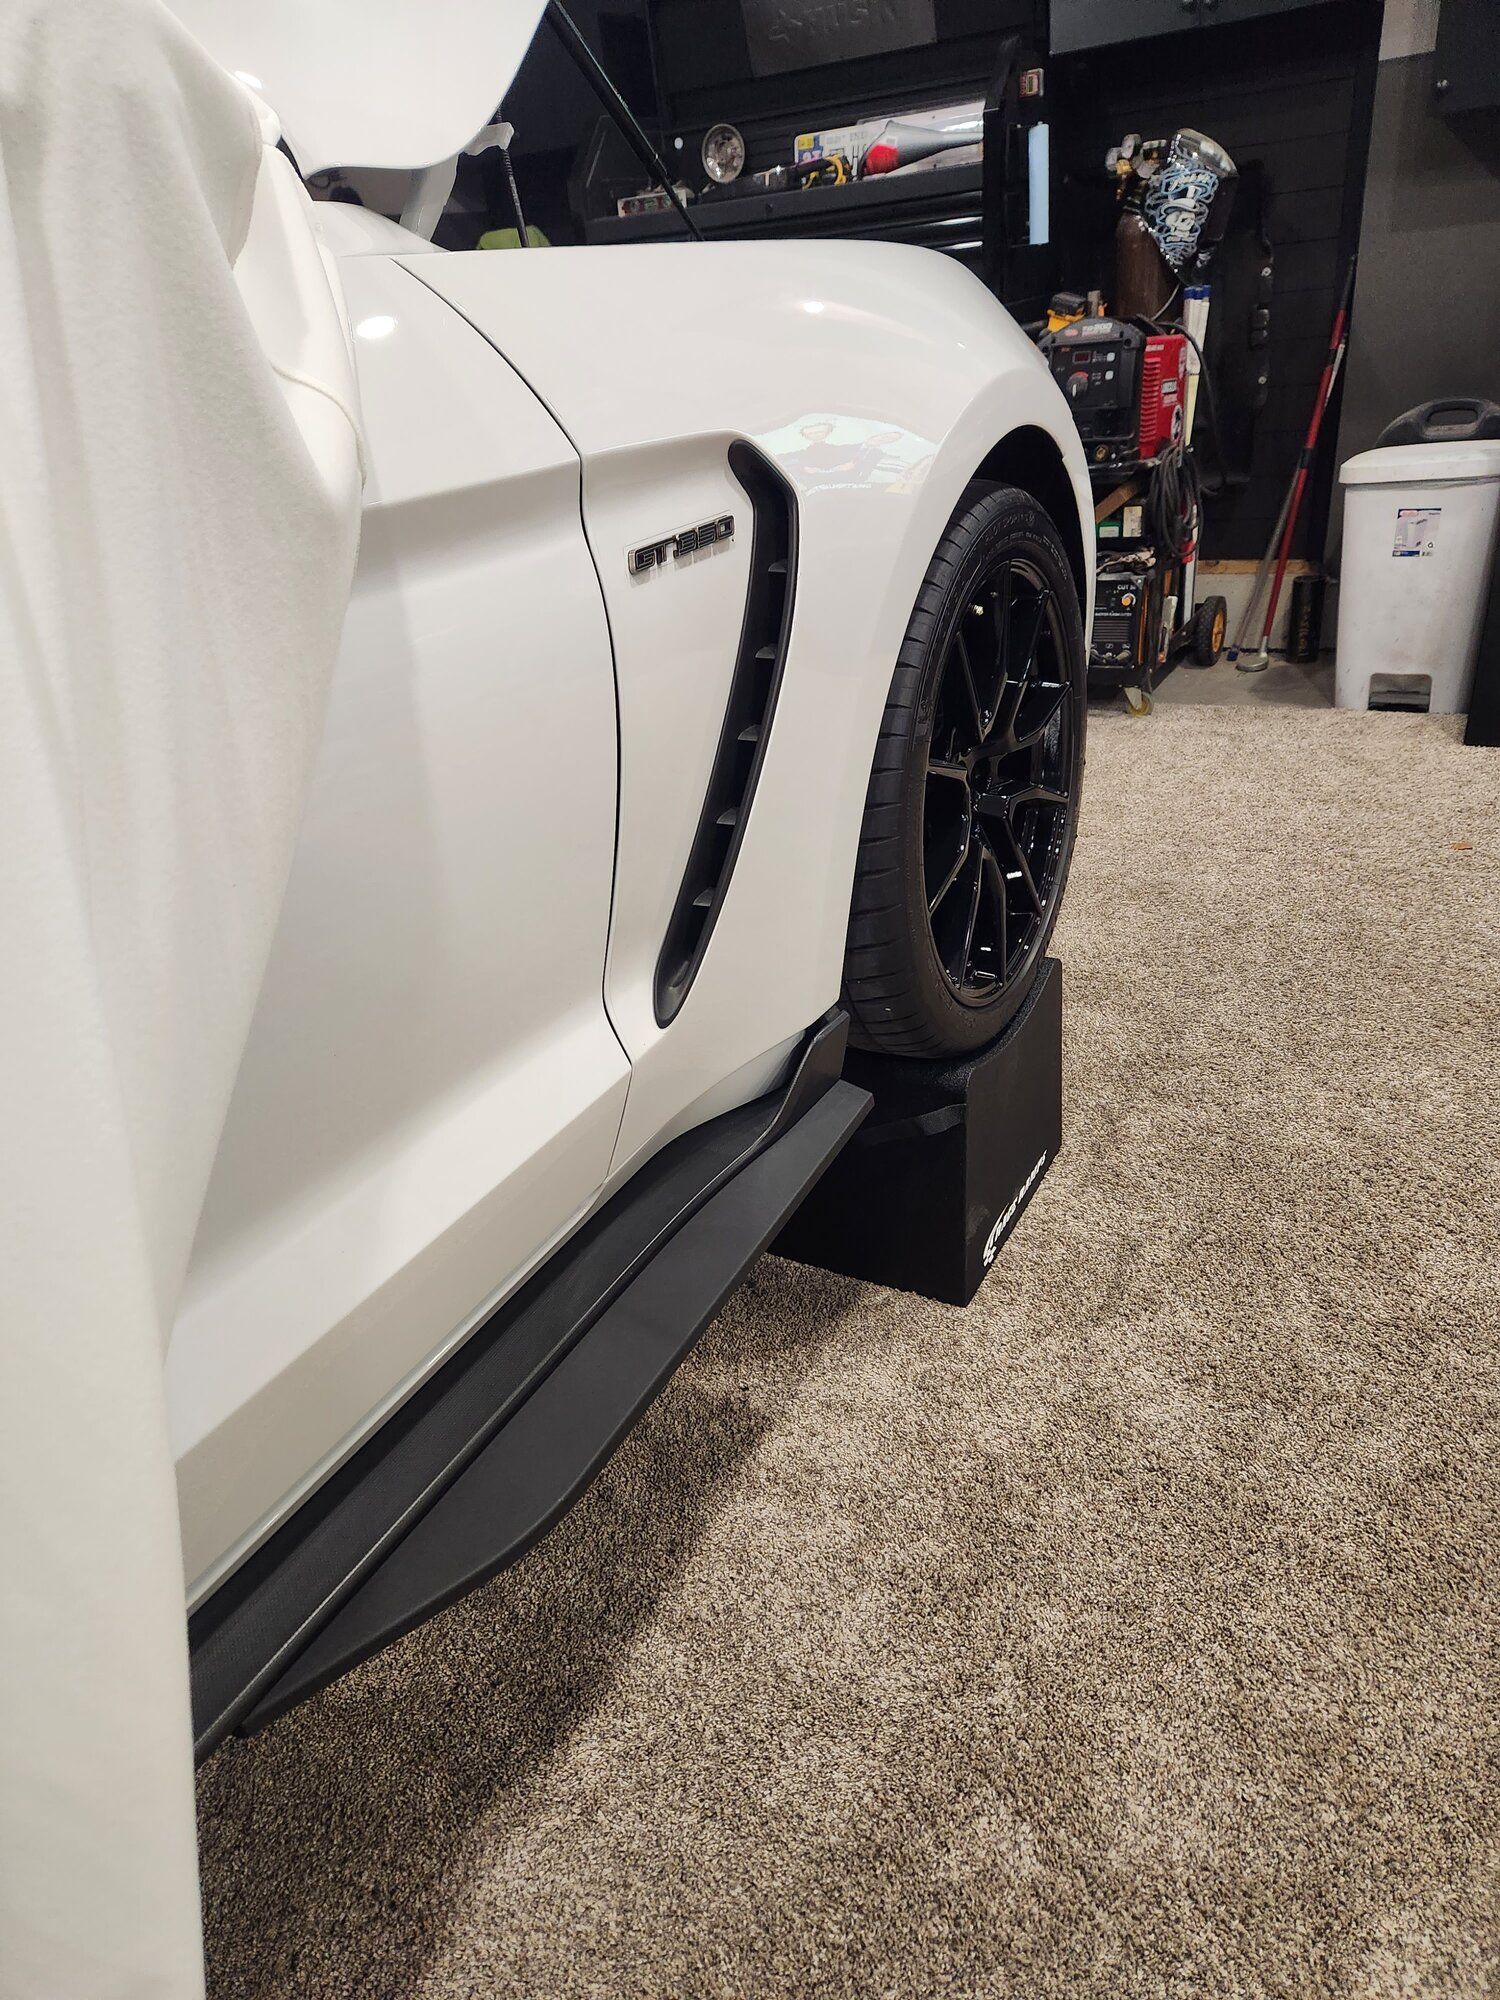 2019 Mustang
GT350 AutoX -  (H8tful350)